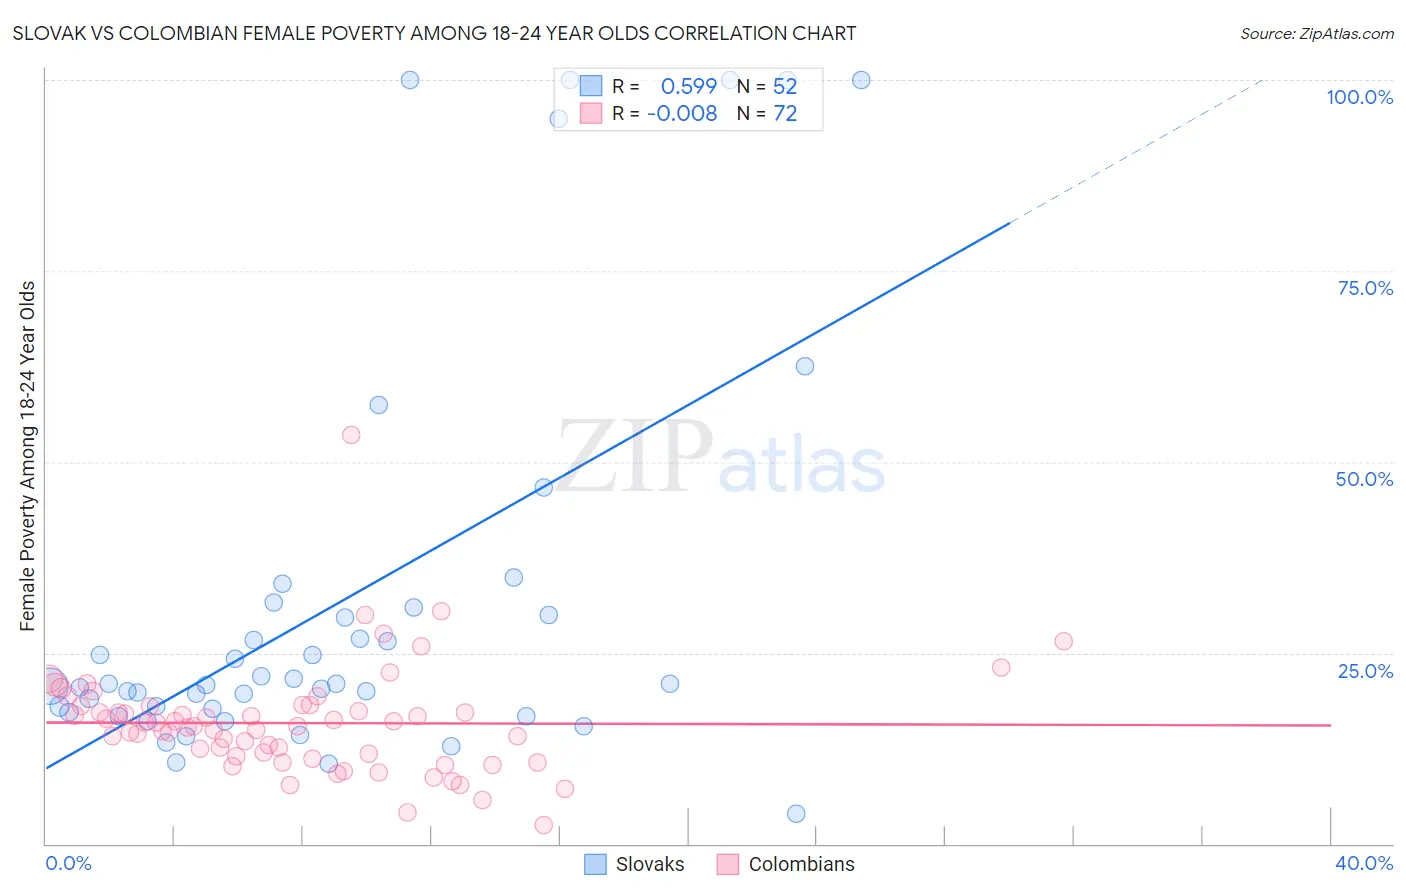 Slovak vs Colombian Female Poverty Among 18-24 Year Olds